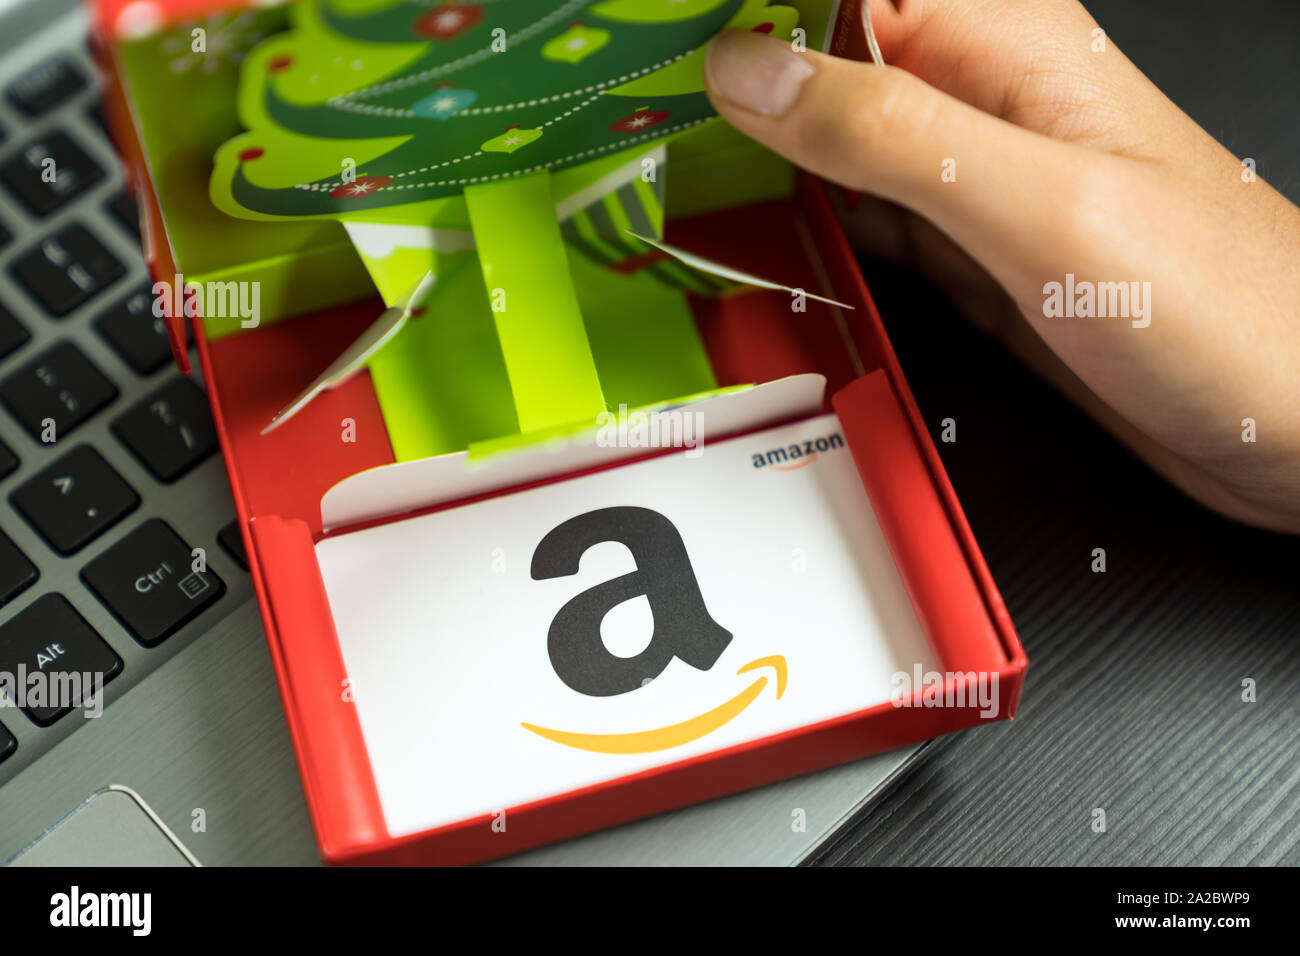 Llevando al menos esponja Amazon gift card as a Christmas present Stock Photo - Alamy